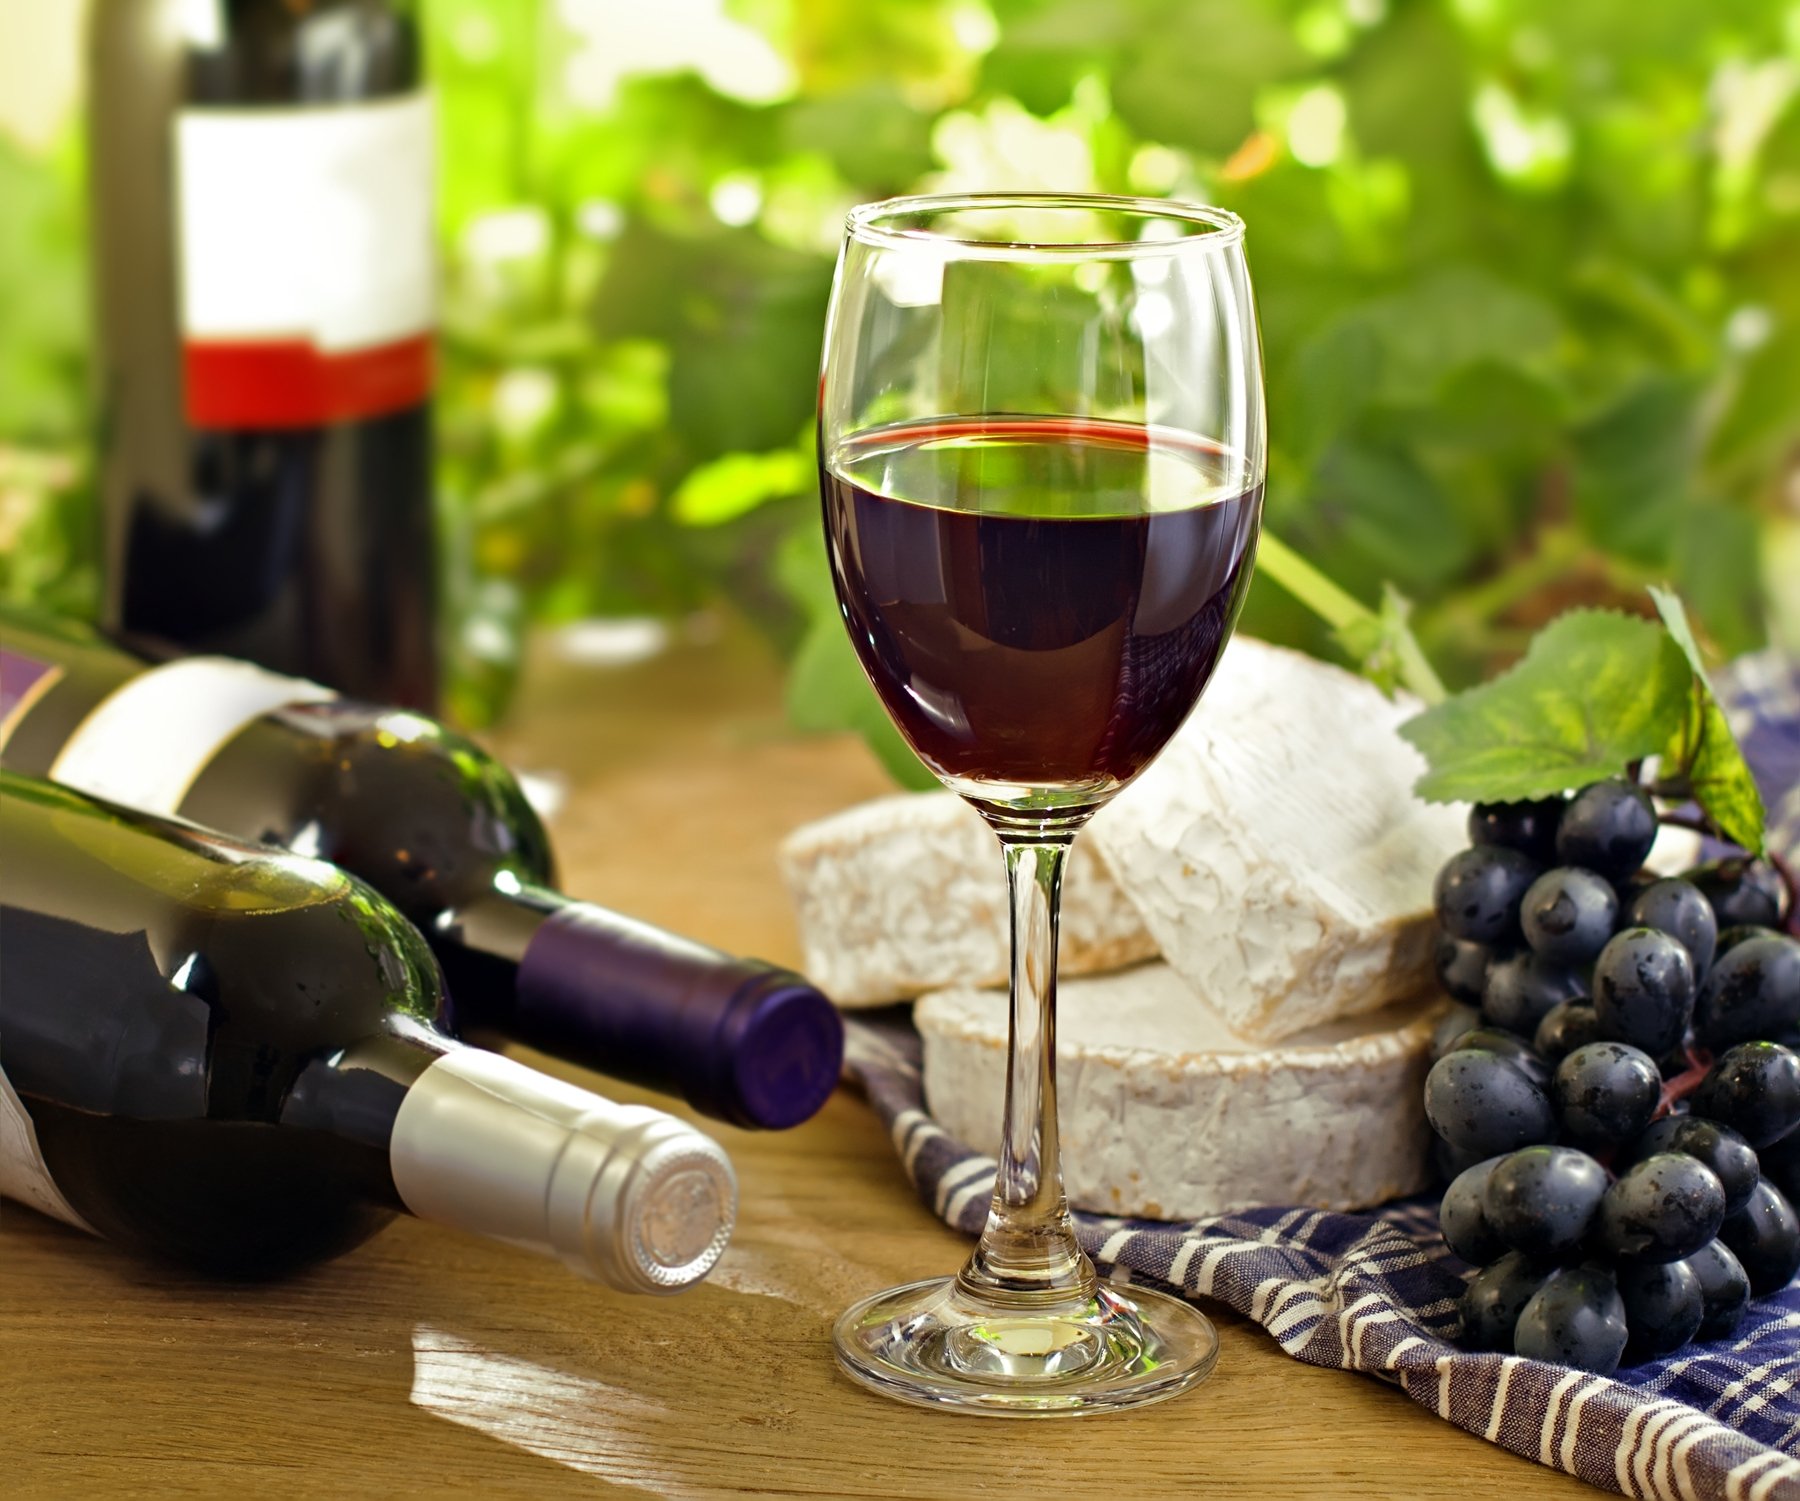 Vino. Испанец винодел. Красное вино. Выно. Виноградное вино.